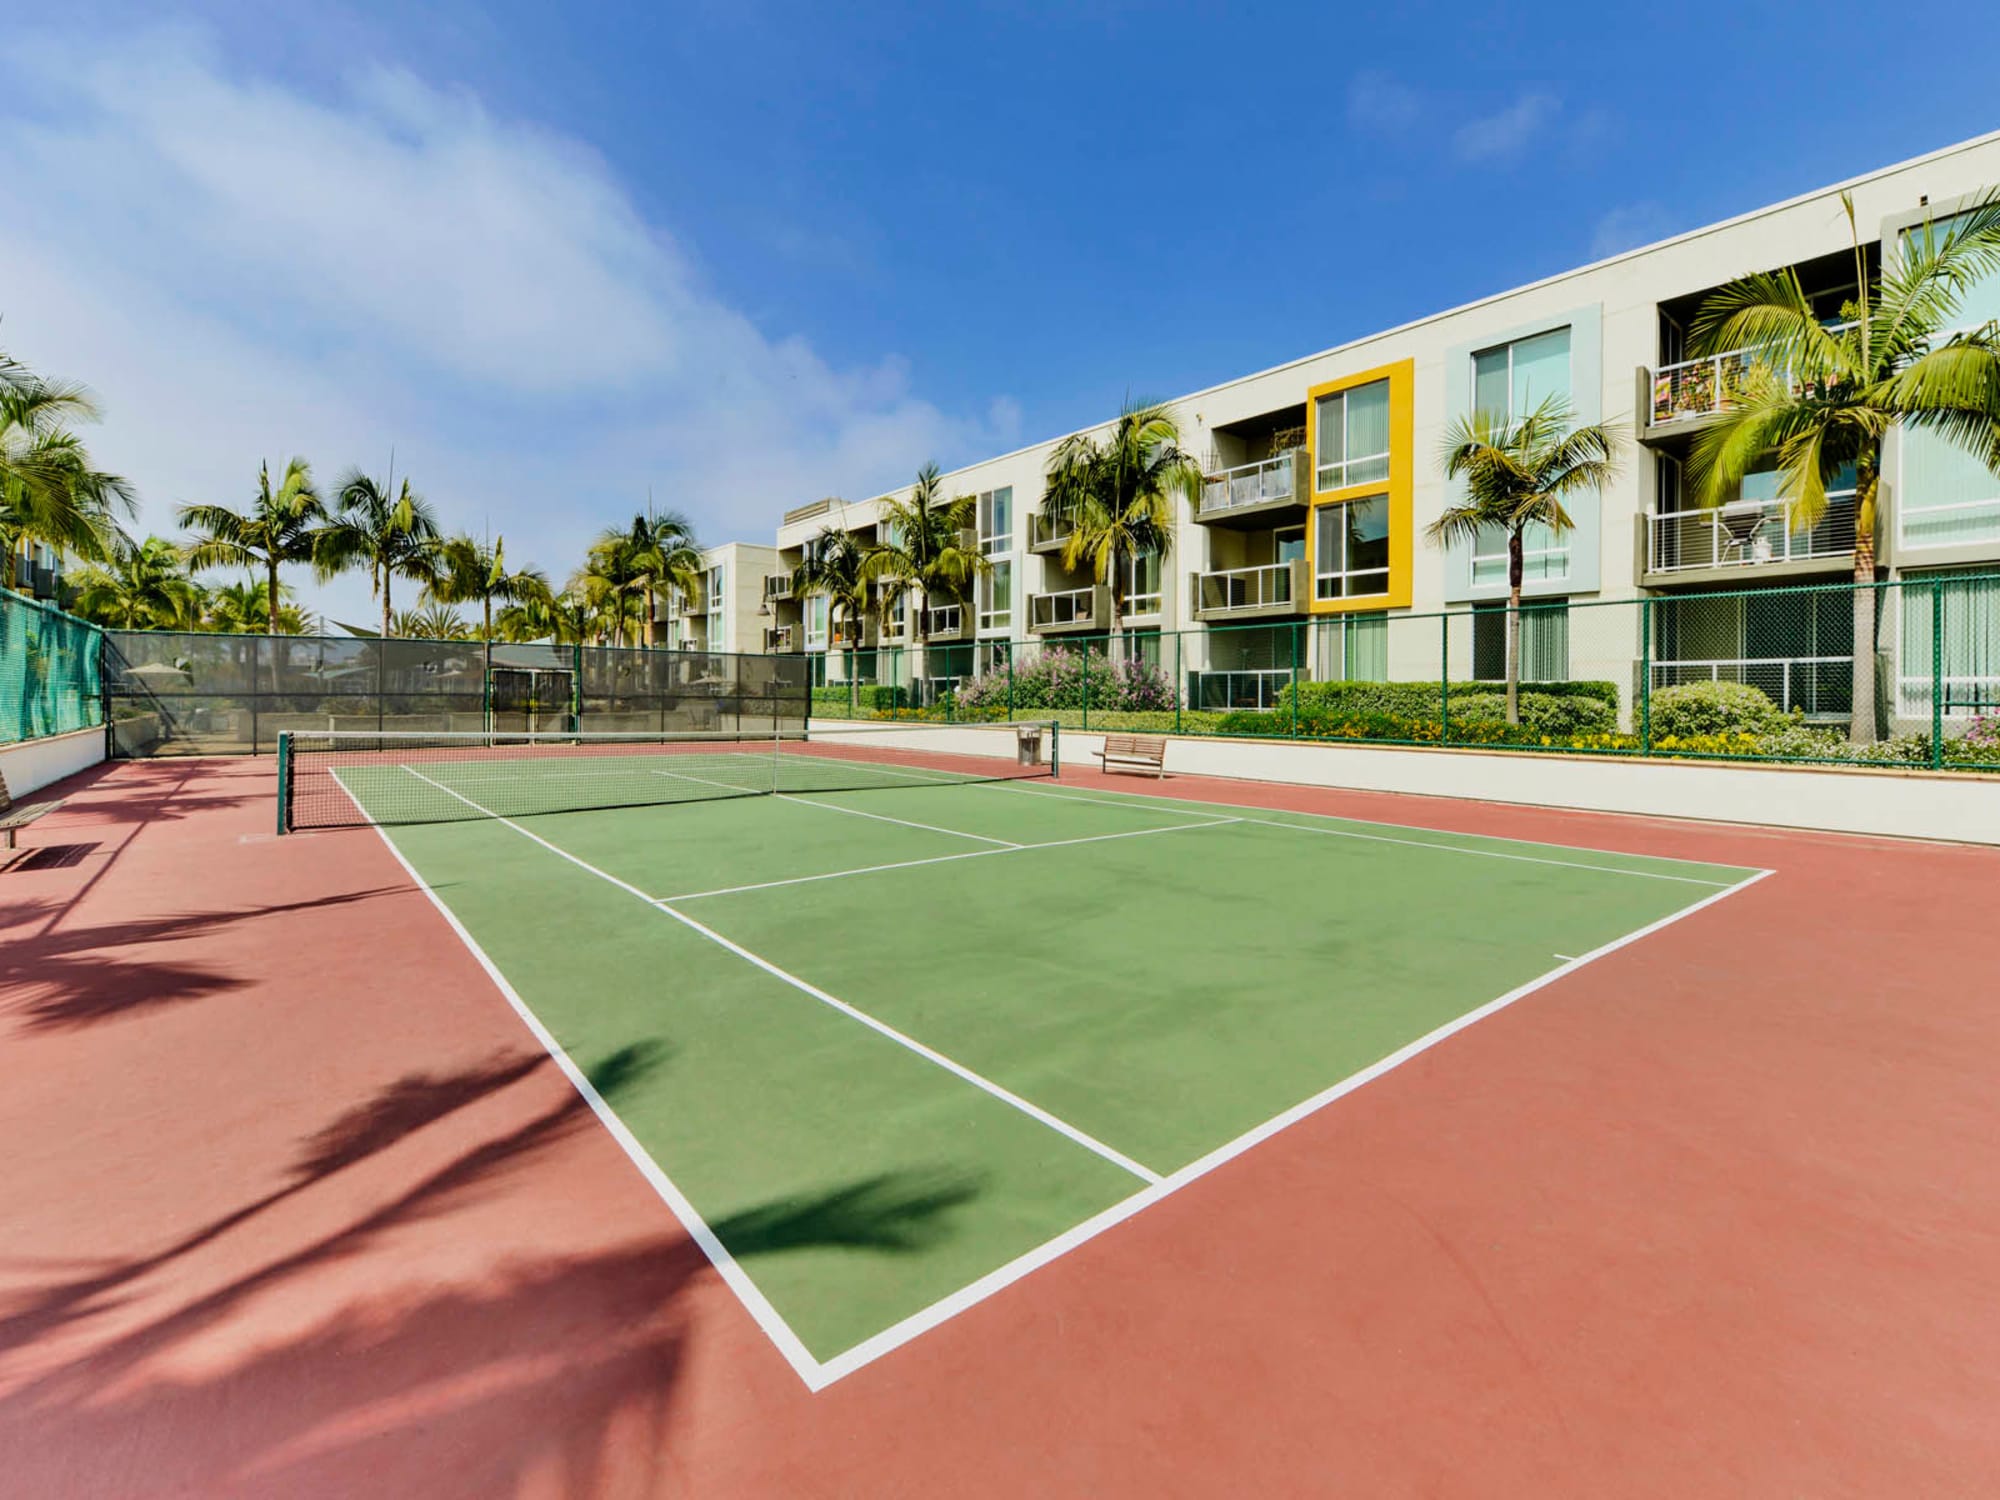 Tennis courts at our community at Waters Edge at Marina Harbor in Marina del Rey, California